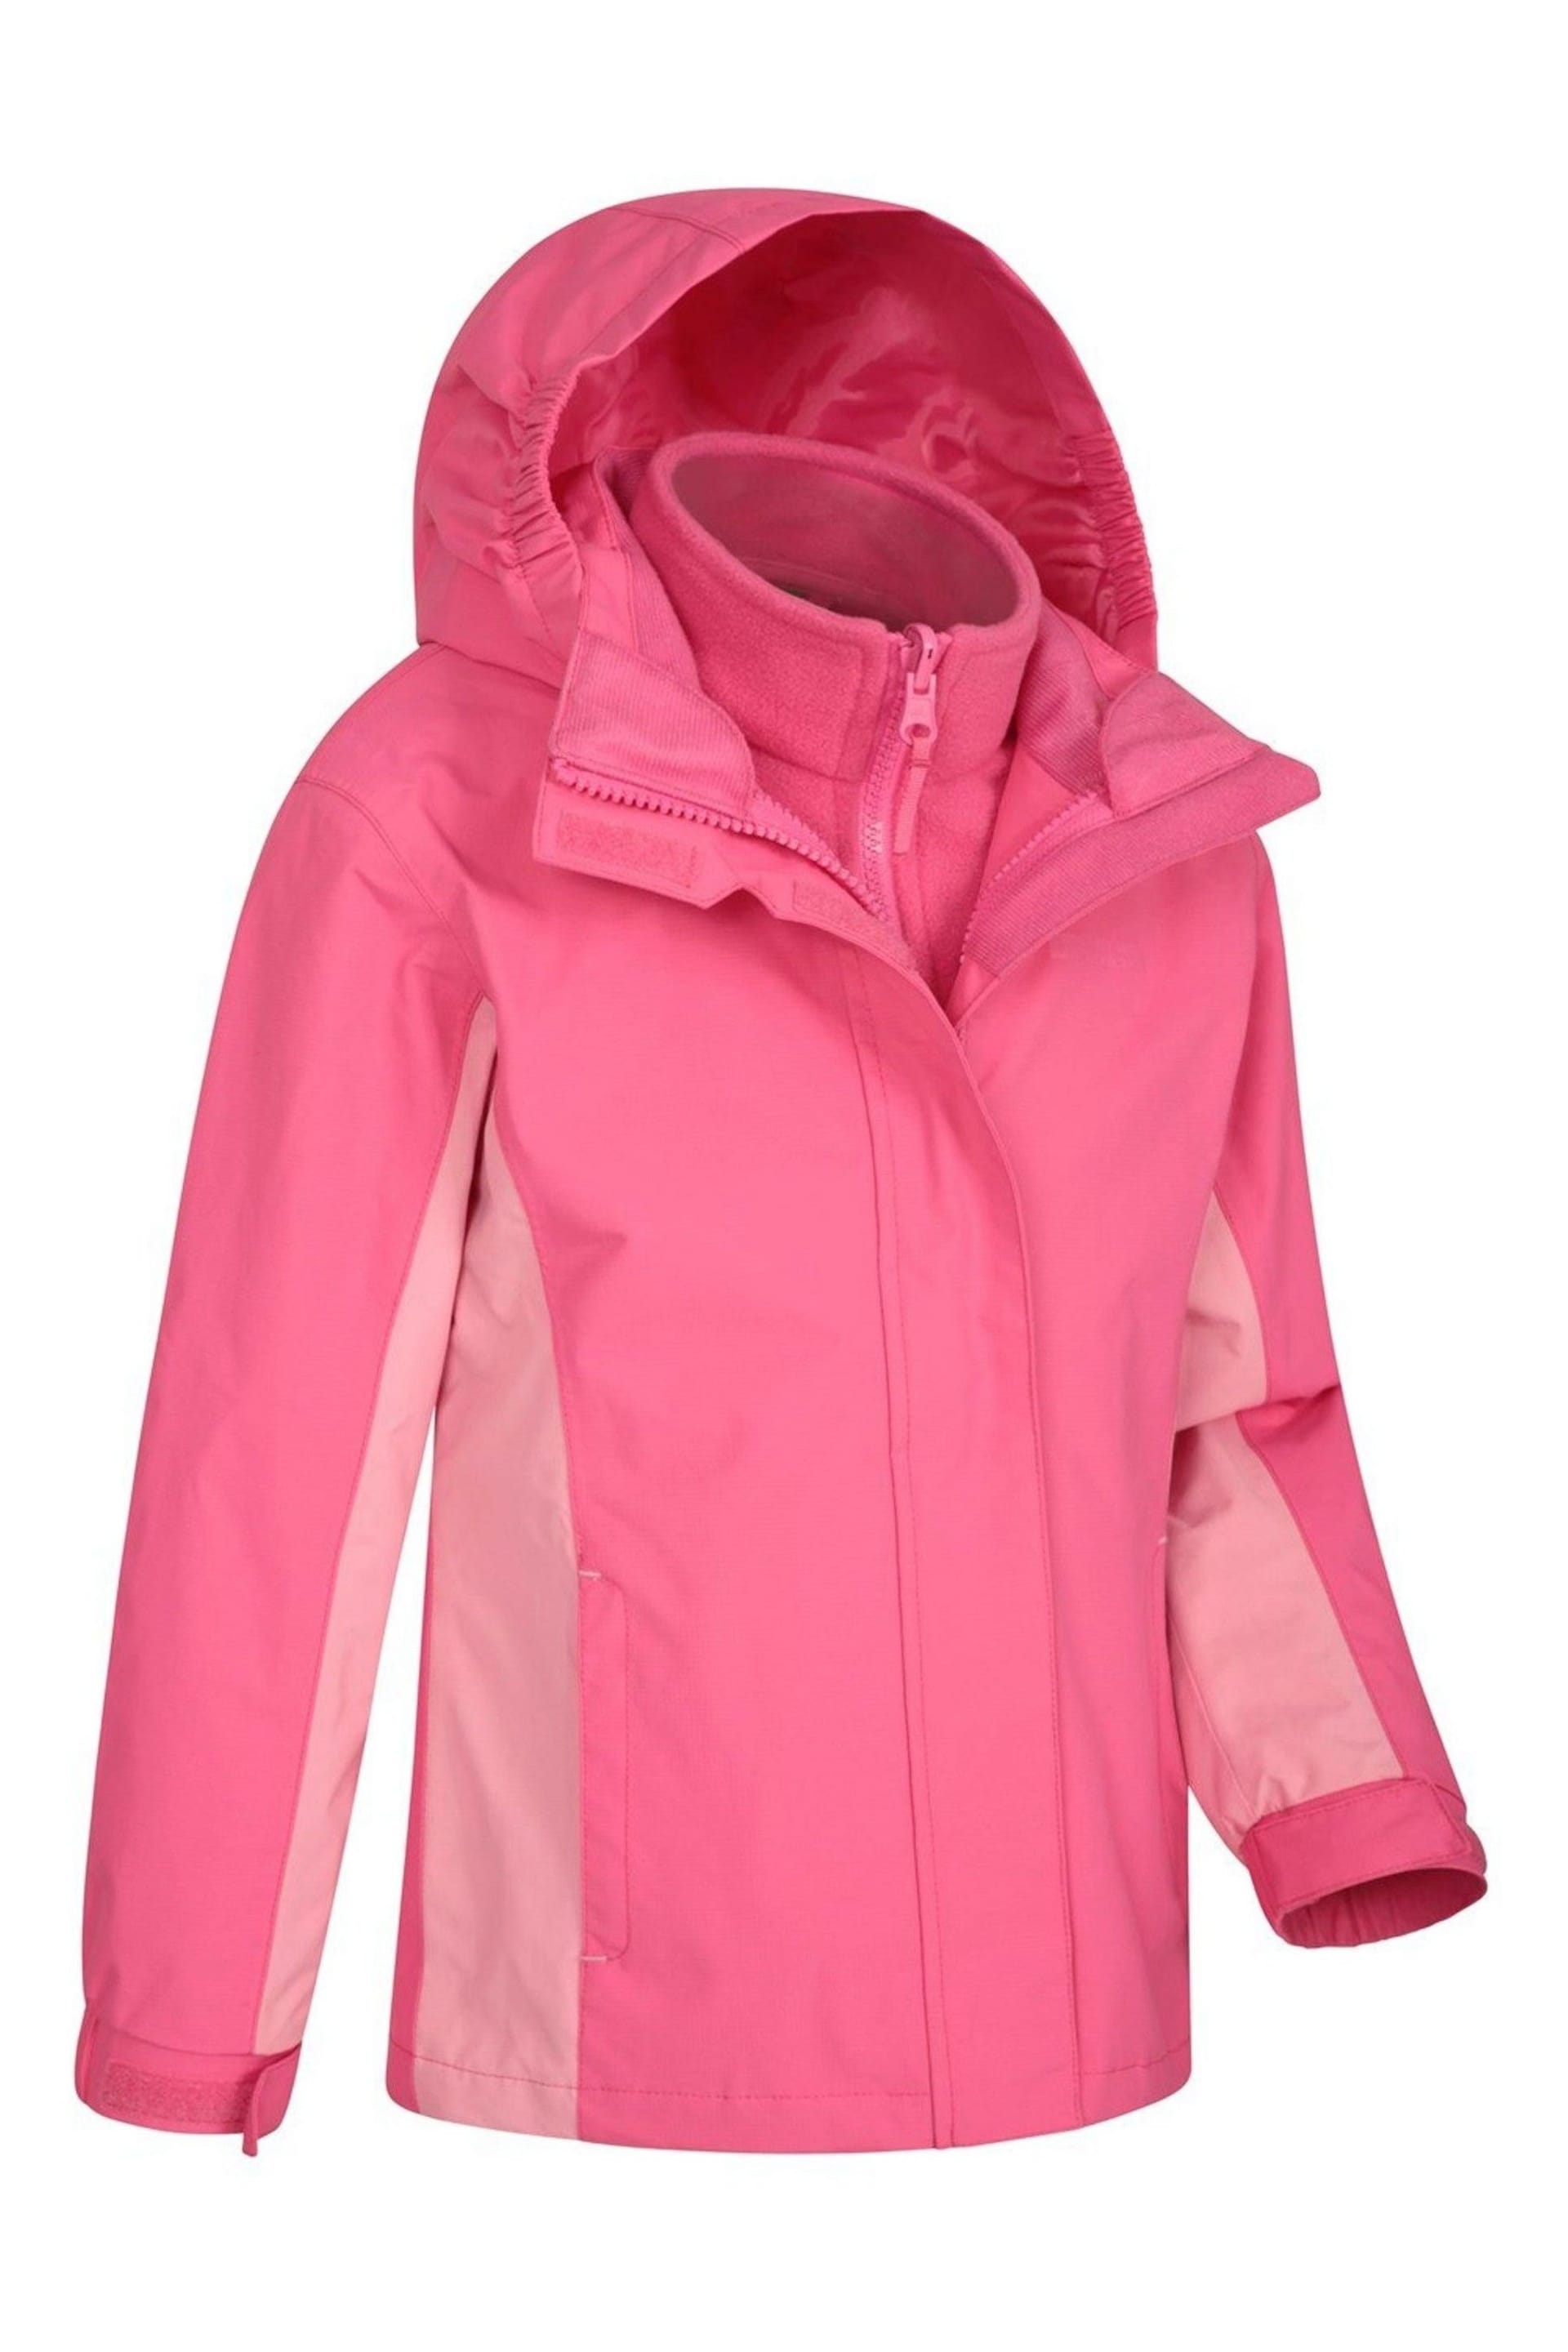 Mountain Warehouse Pink Lightning 3 in 1 Waterproof Jacket - Image 2 of 4